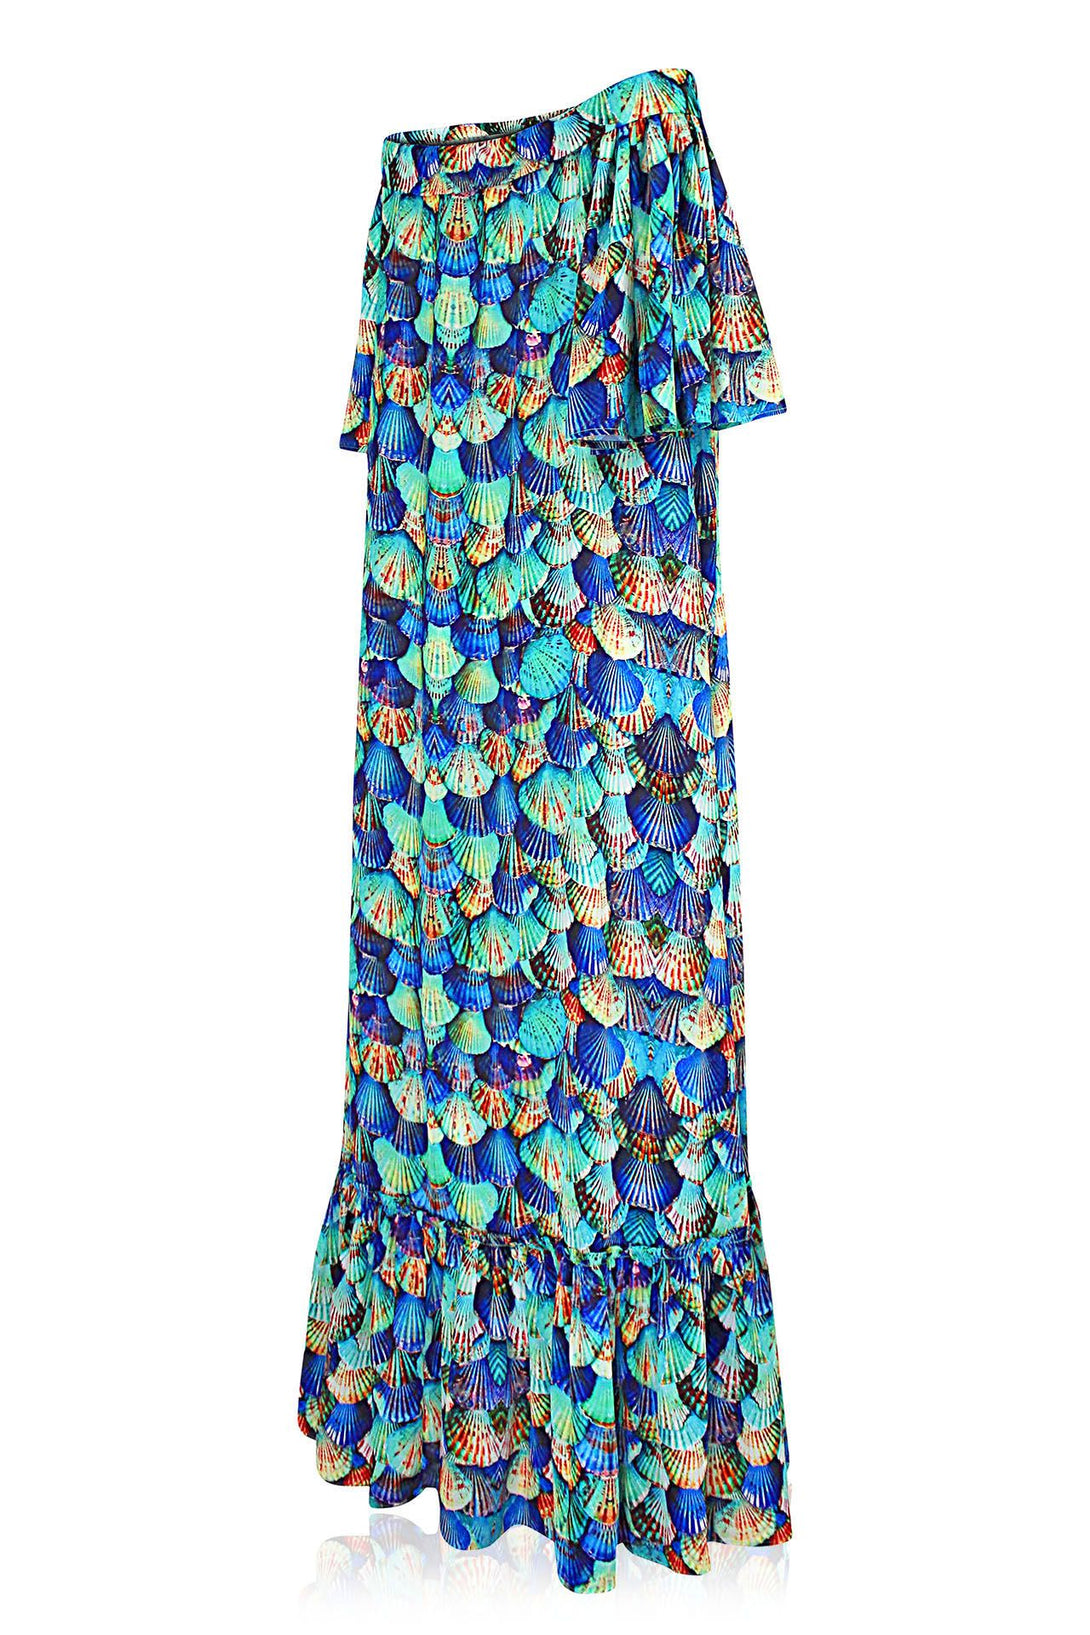 "royal blue cocktail dress" "off the shoulder summer dress" "Shahida Parides"